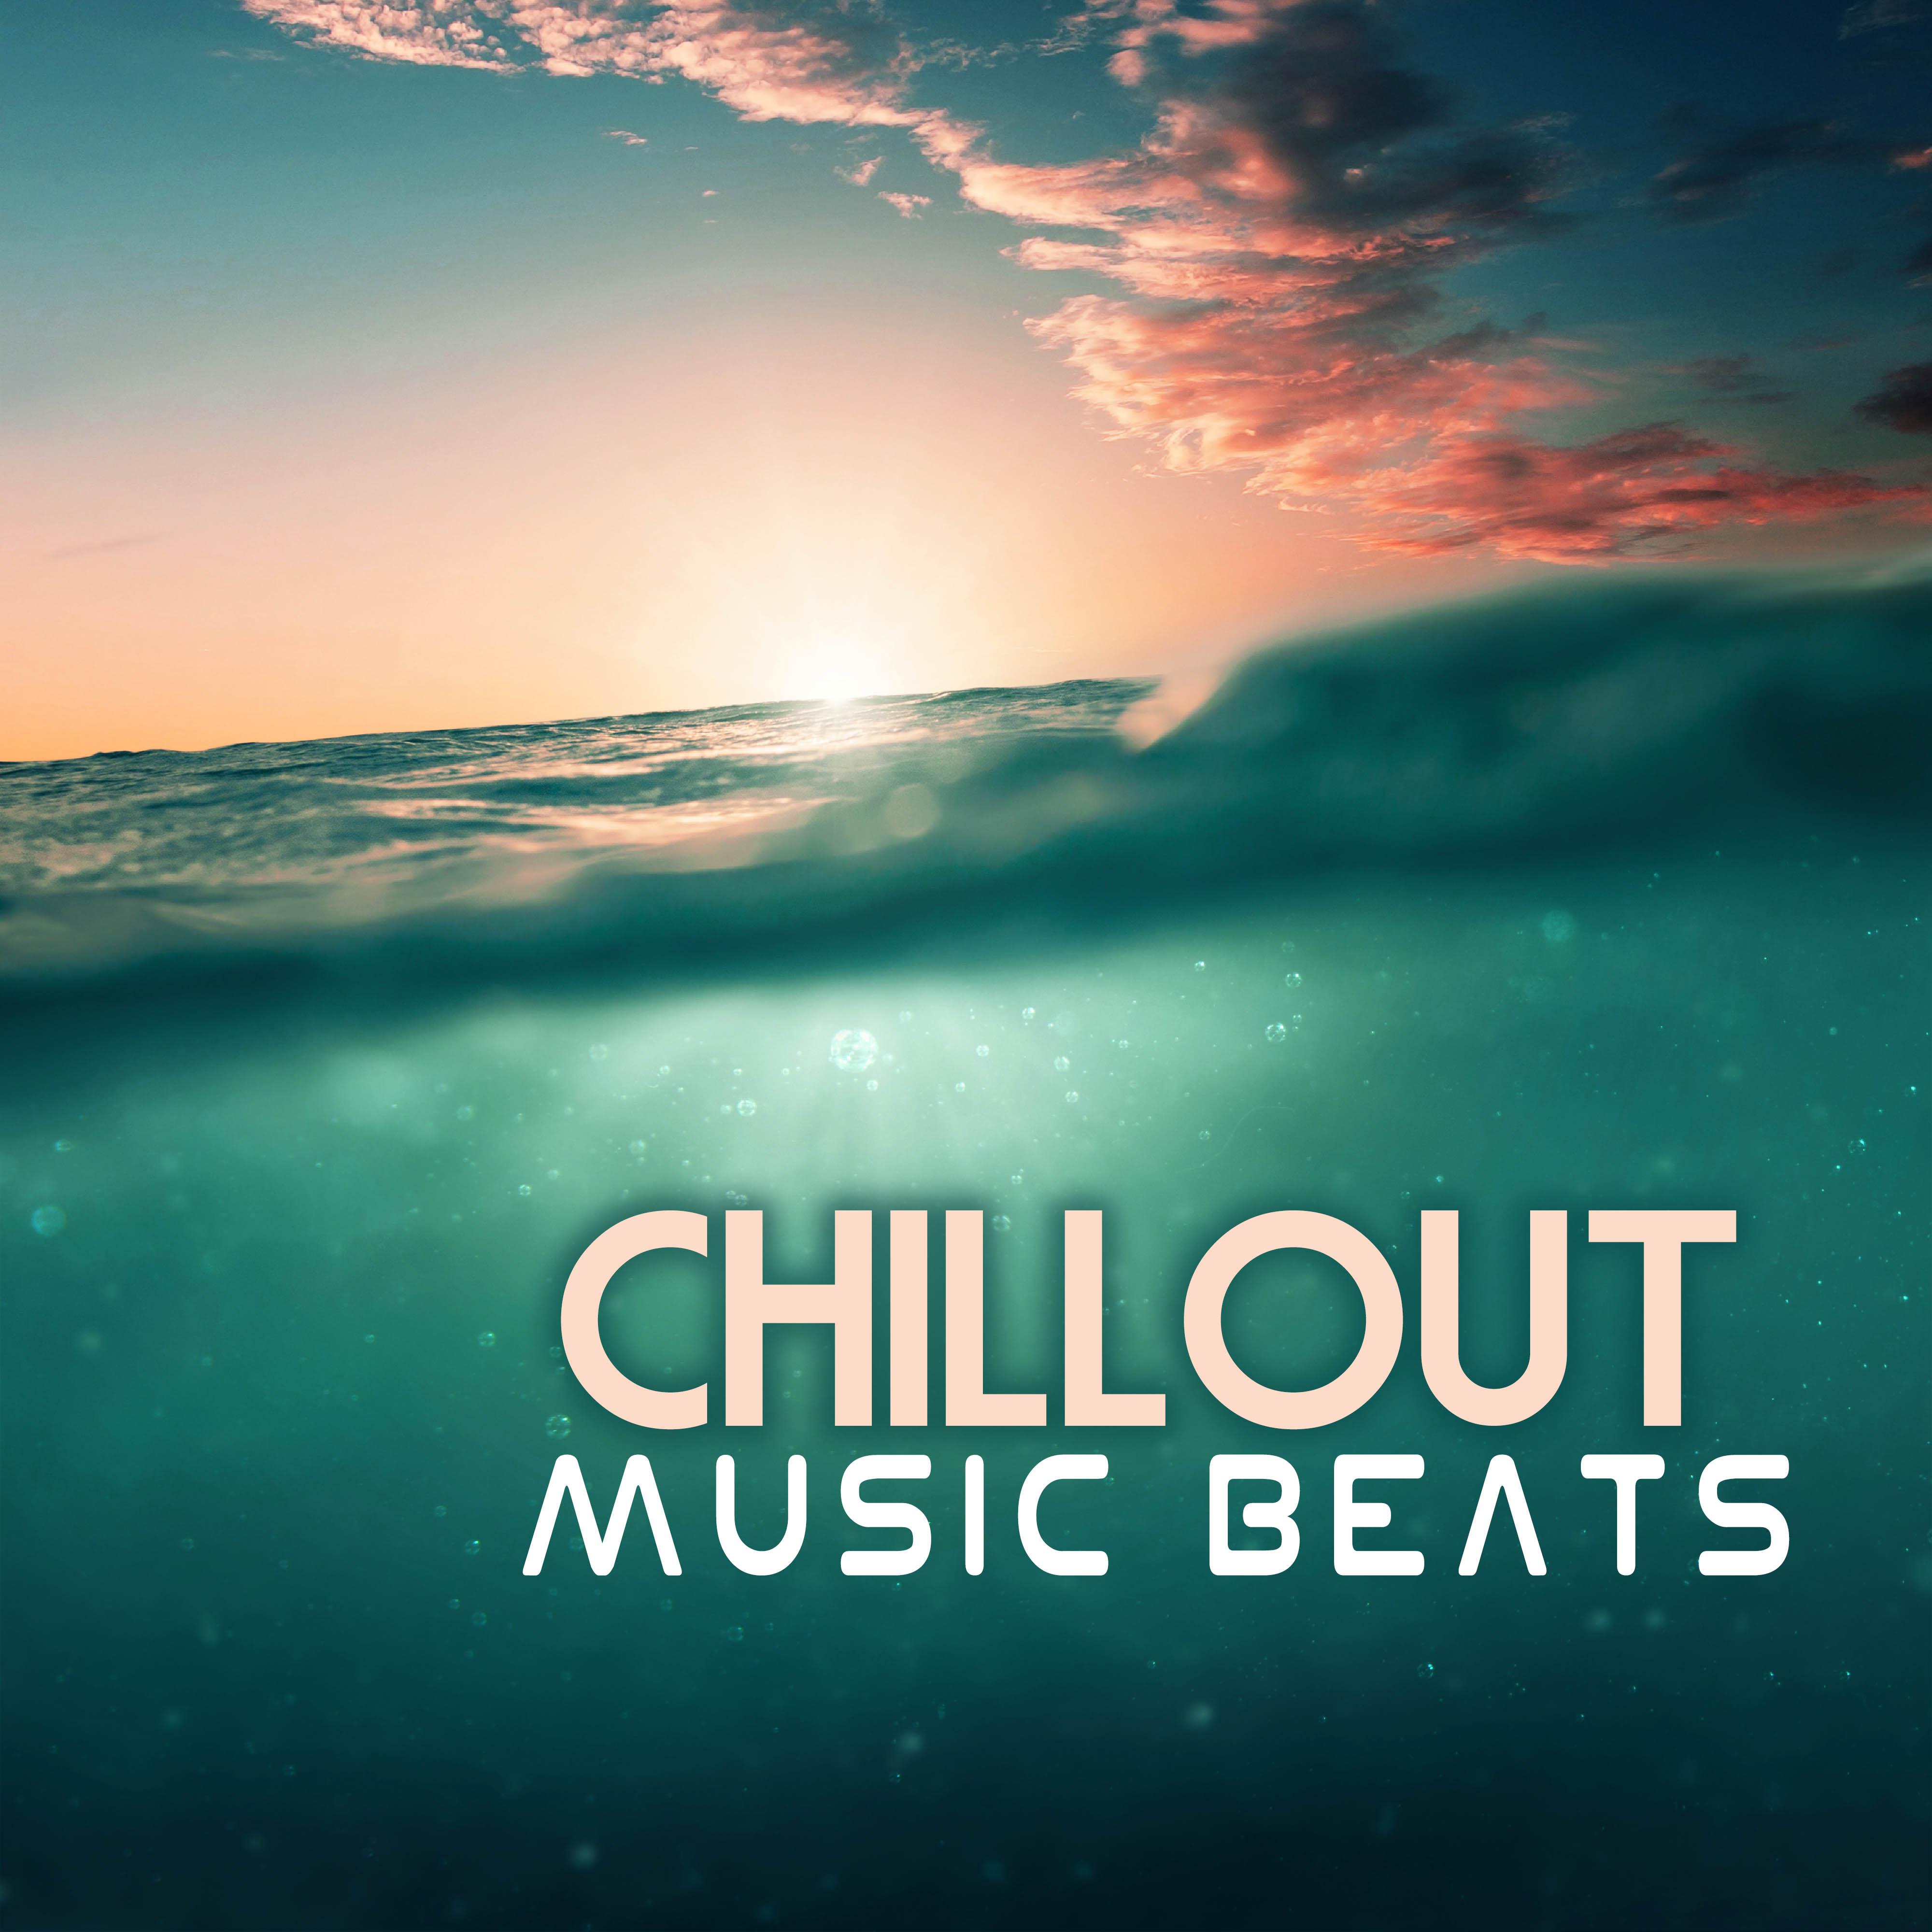 Chillout Music Beats - Hot Music Selection